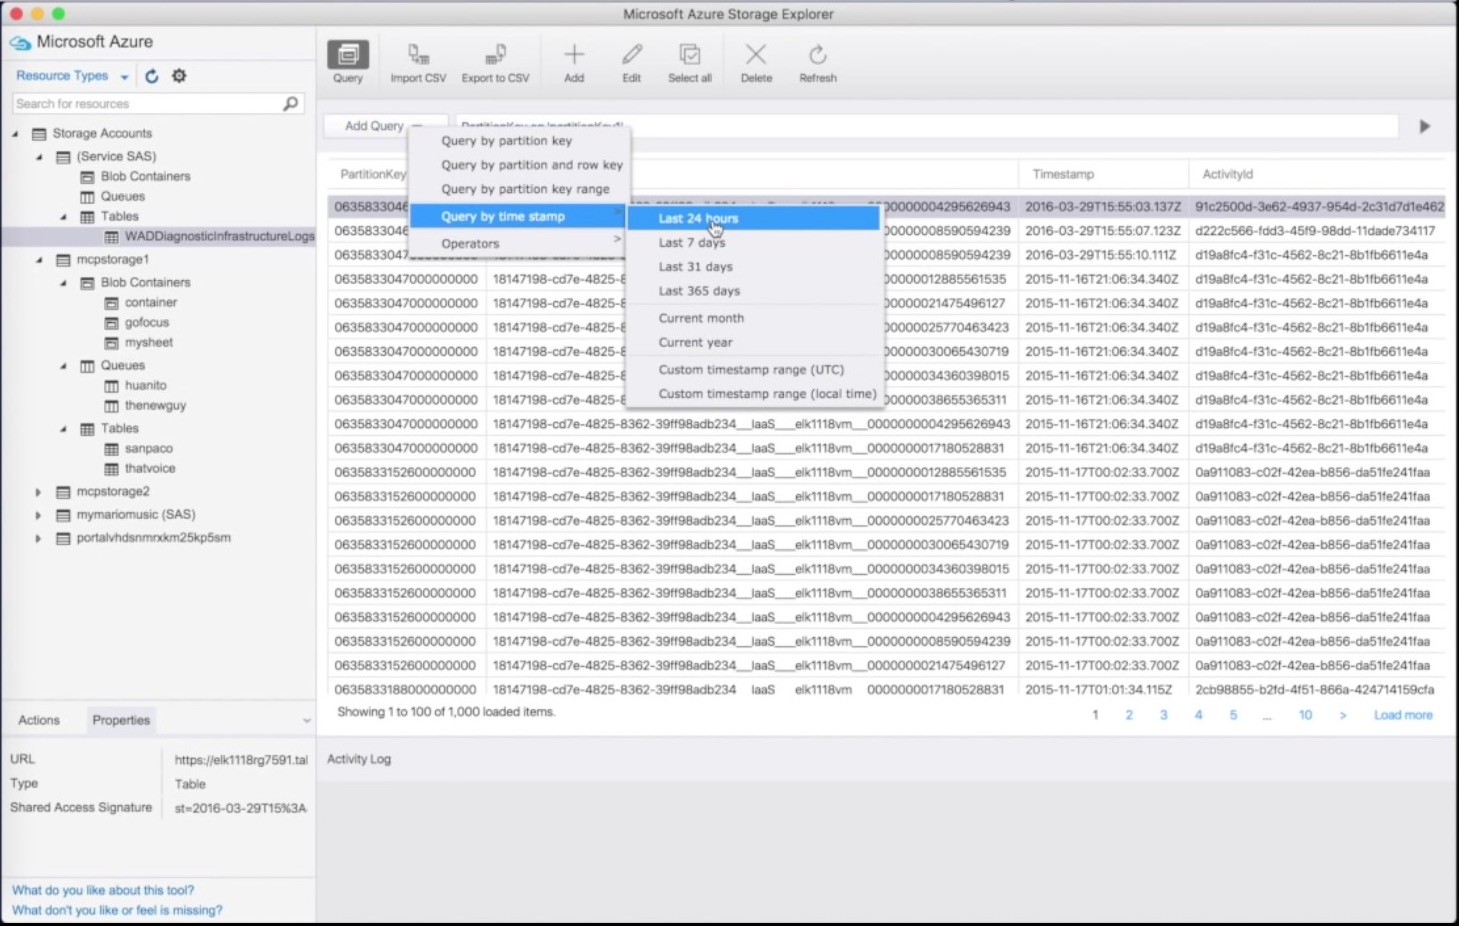 microsoft azure storage explorer download for windows 10